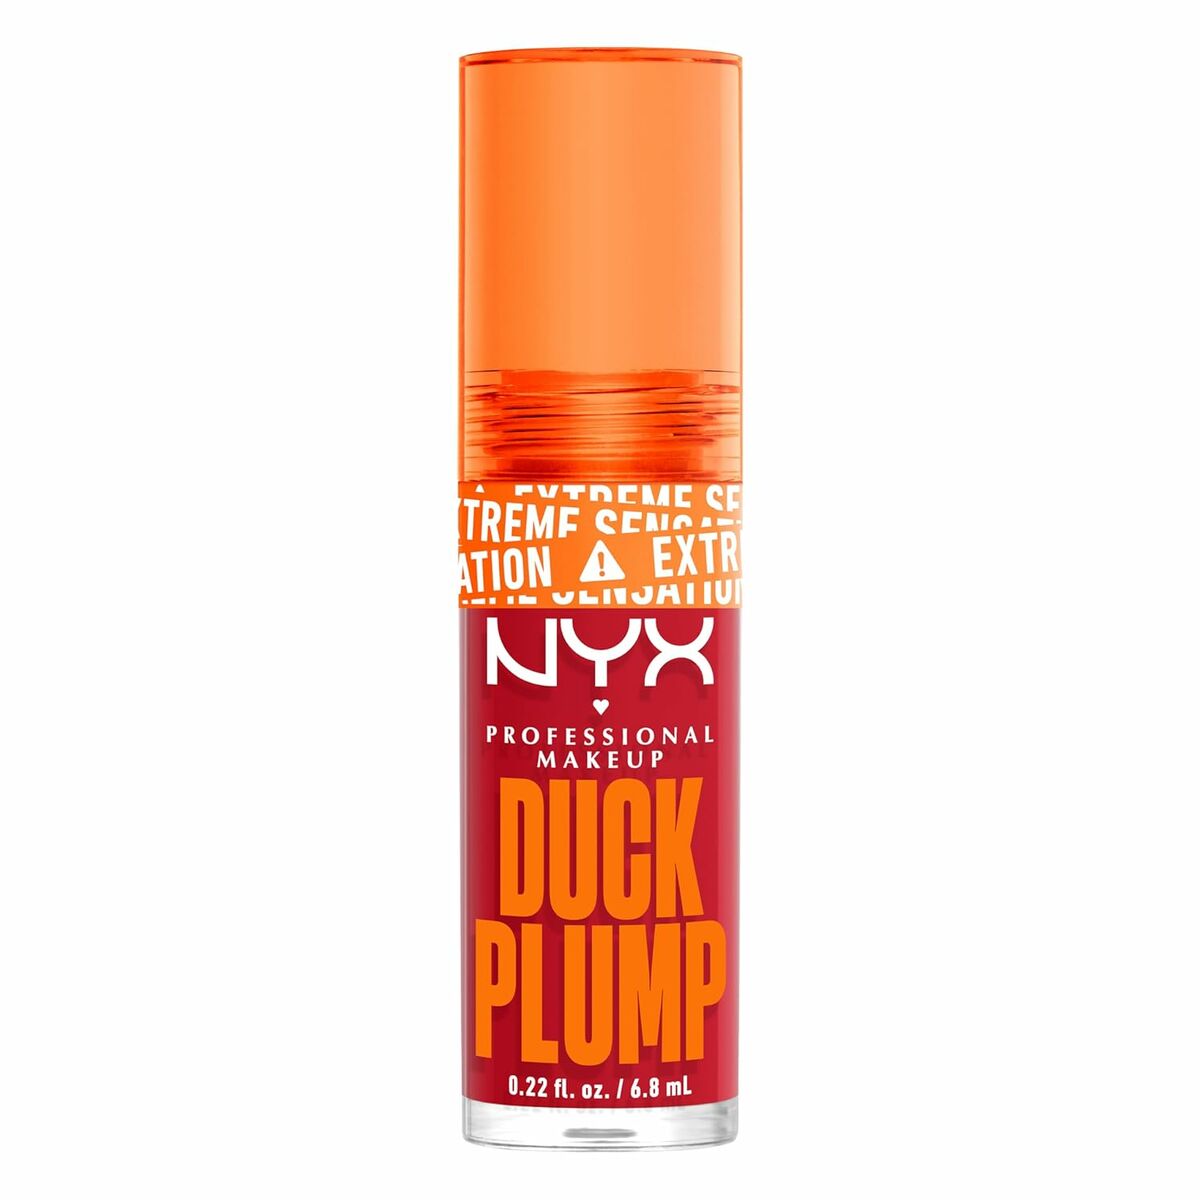 Lippgloss NYX Duck Plump Cherry spicy 6,8 ml - CA International  